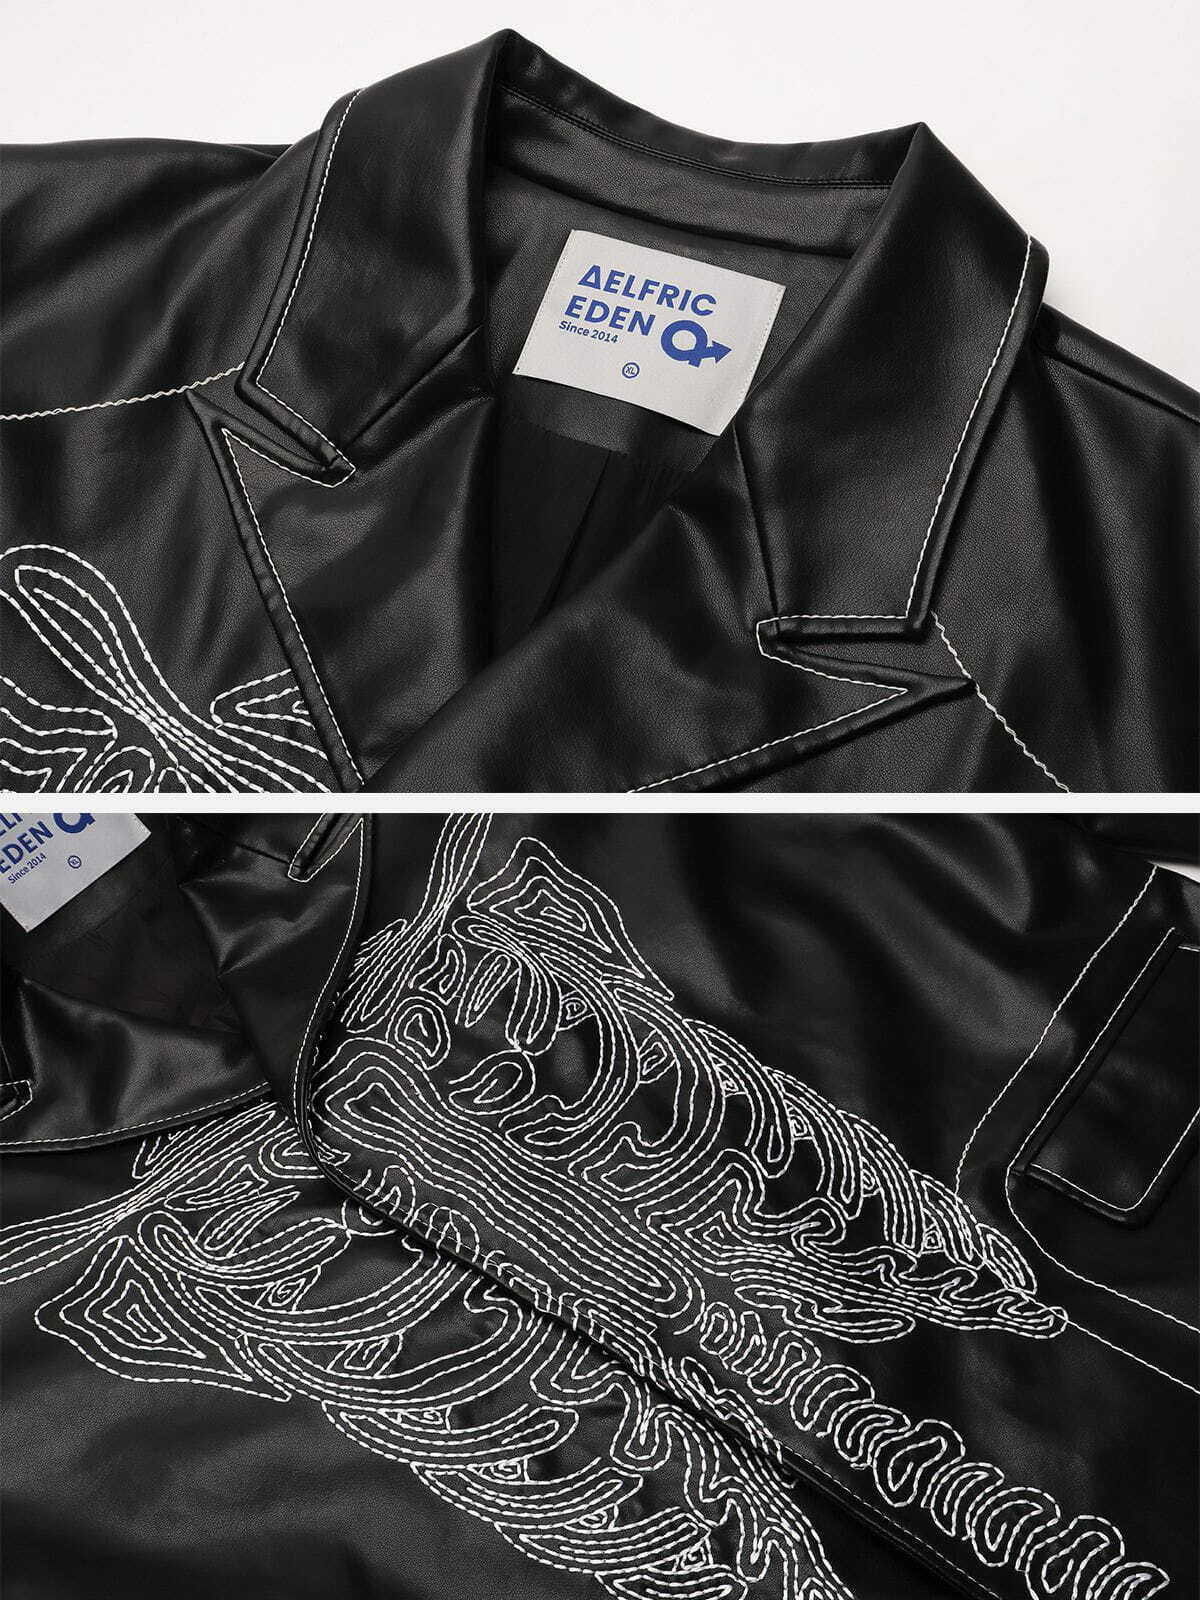 classic black skull jacket [edgy] streetwear essential 3526